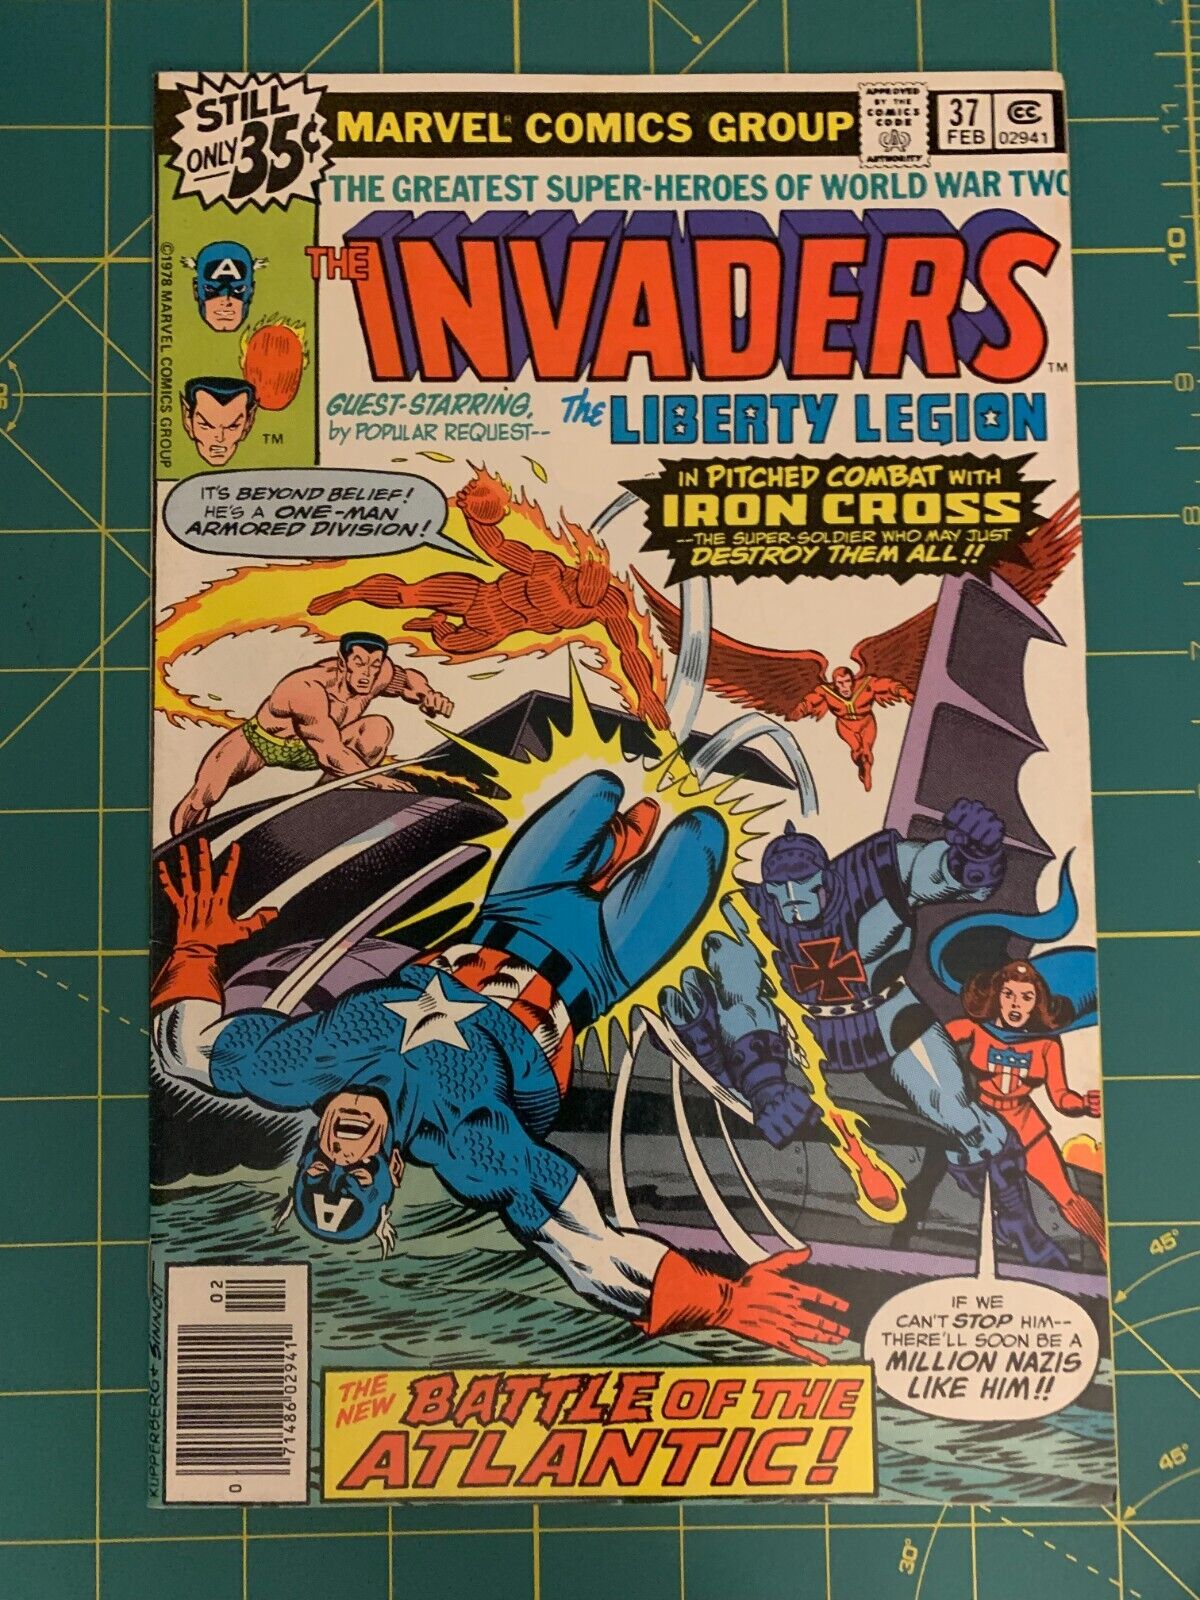 The Invaders #37 - Feb 1979 - Vol.1 - Minor Key - (9173)